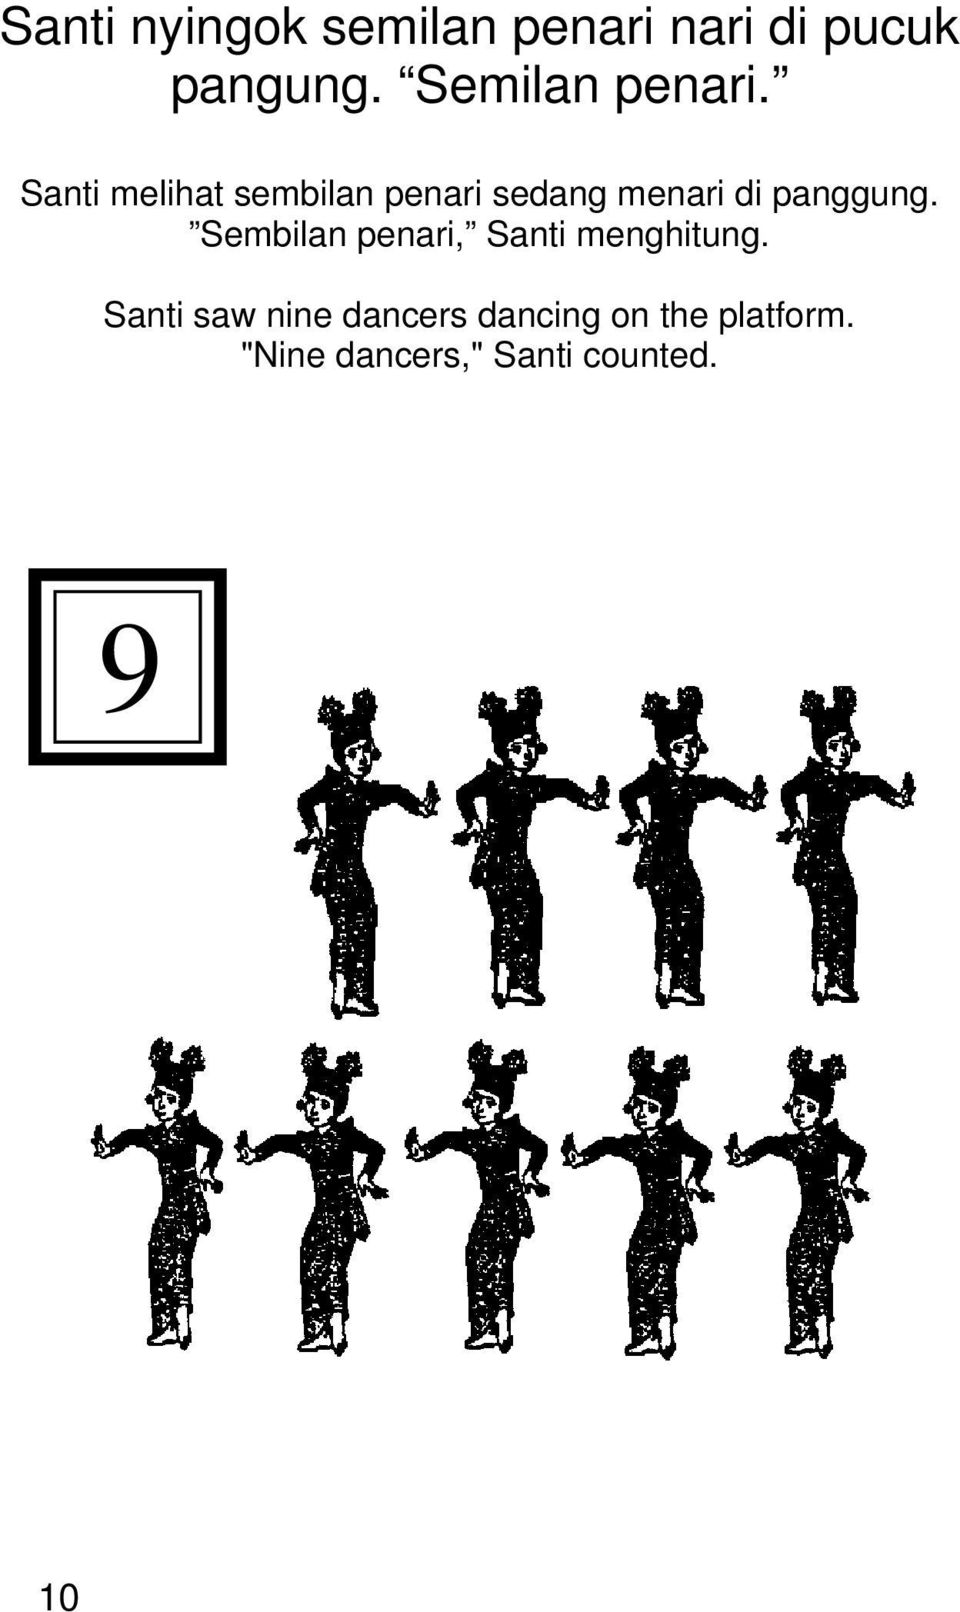 Santi melihat sembilan penari sedang menari di panggung.